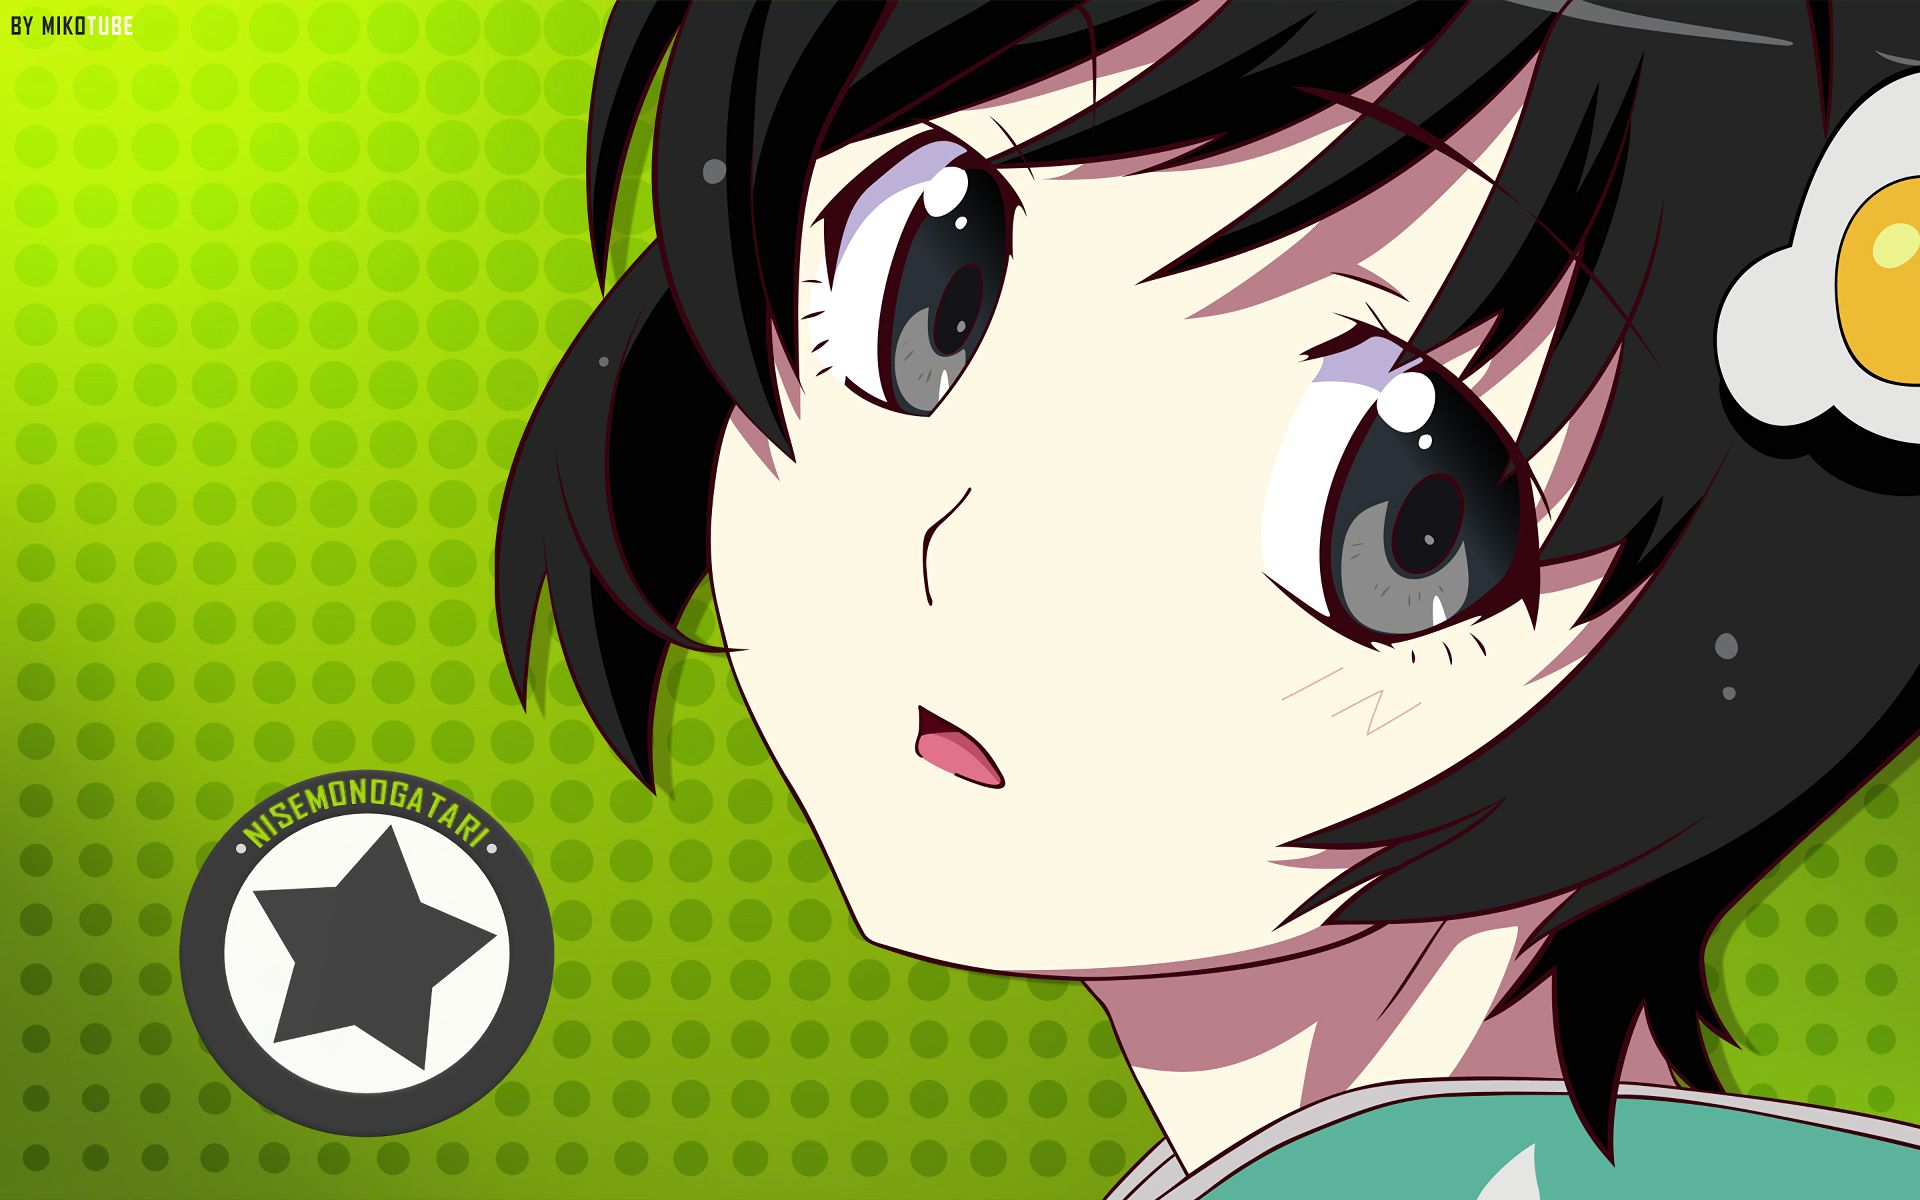 Descarga gratis la imagen Animado, Monogatari (Serie), Tsukihi Araragi en el escritorio de tu PC